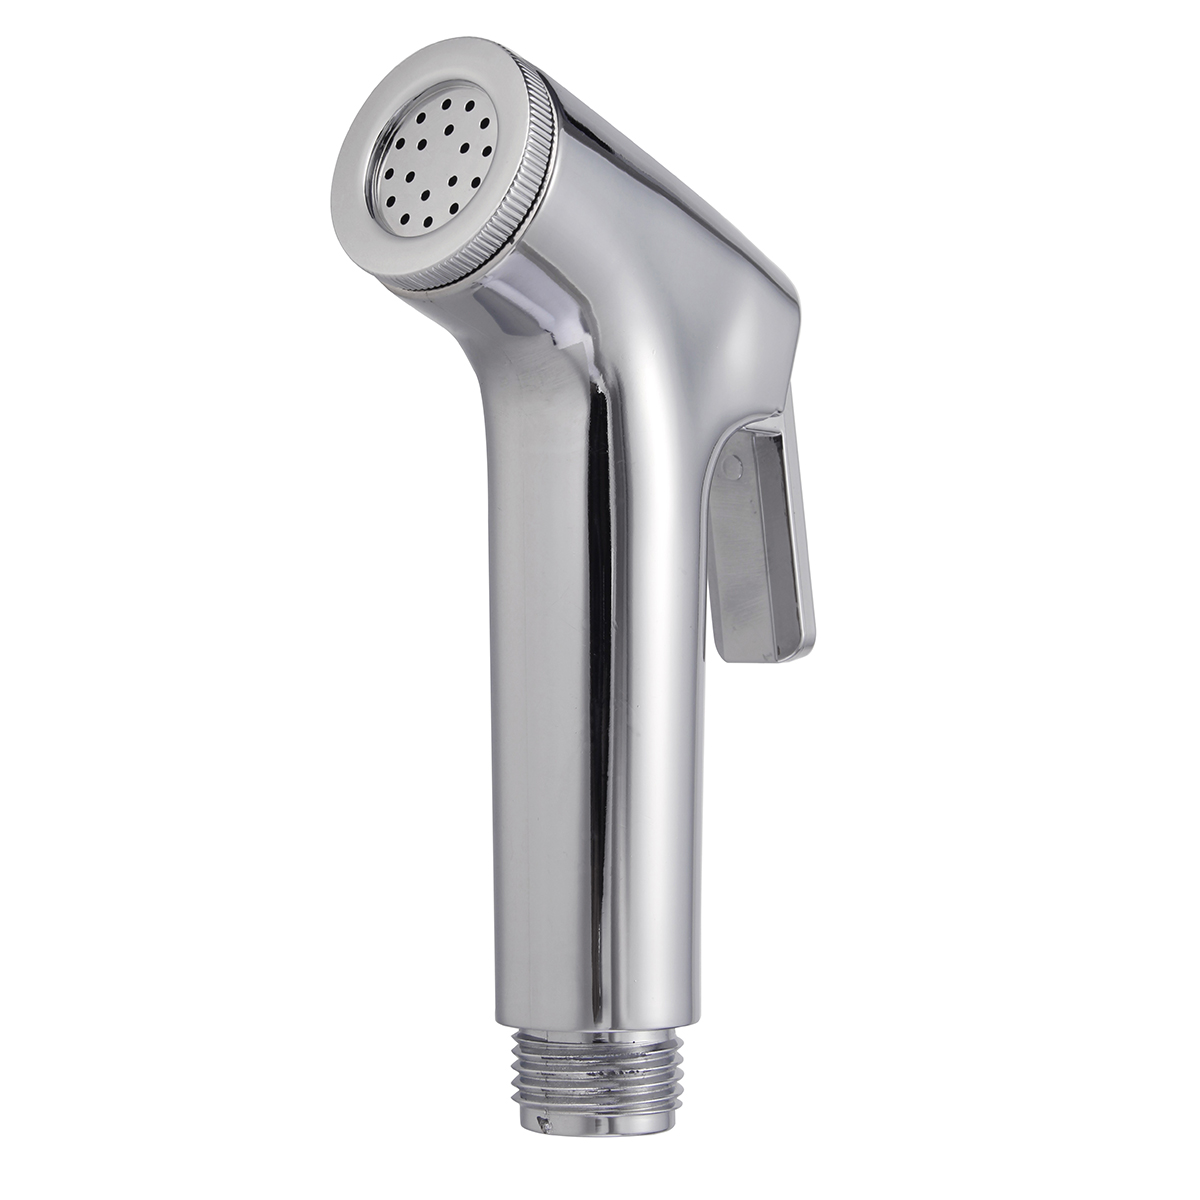 

Handheld Bathrom Toilet Sprayer Bidet Shattaf Flushing Flusher Shower Head Nozzle Wall Mounted Water Spout